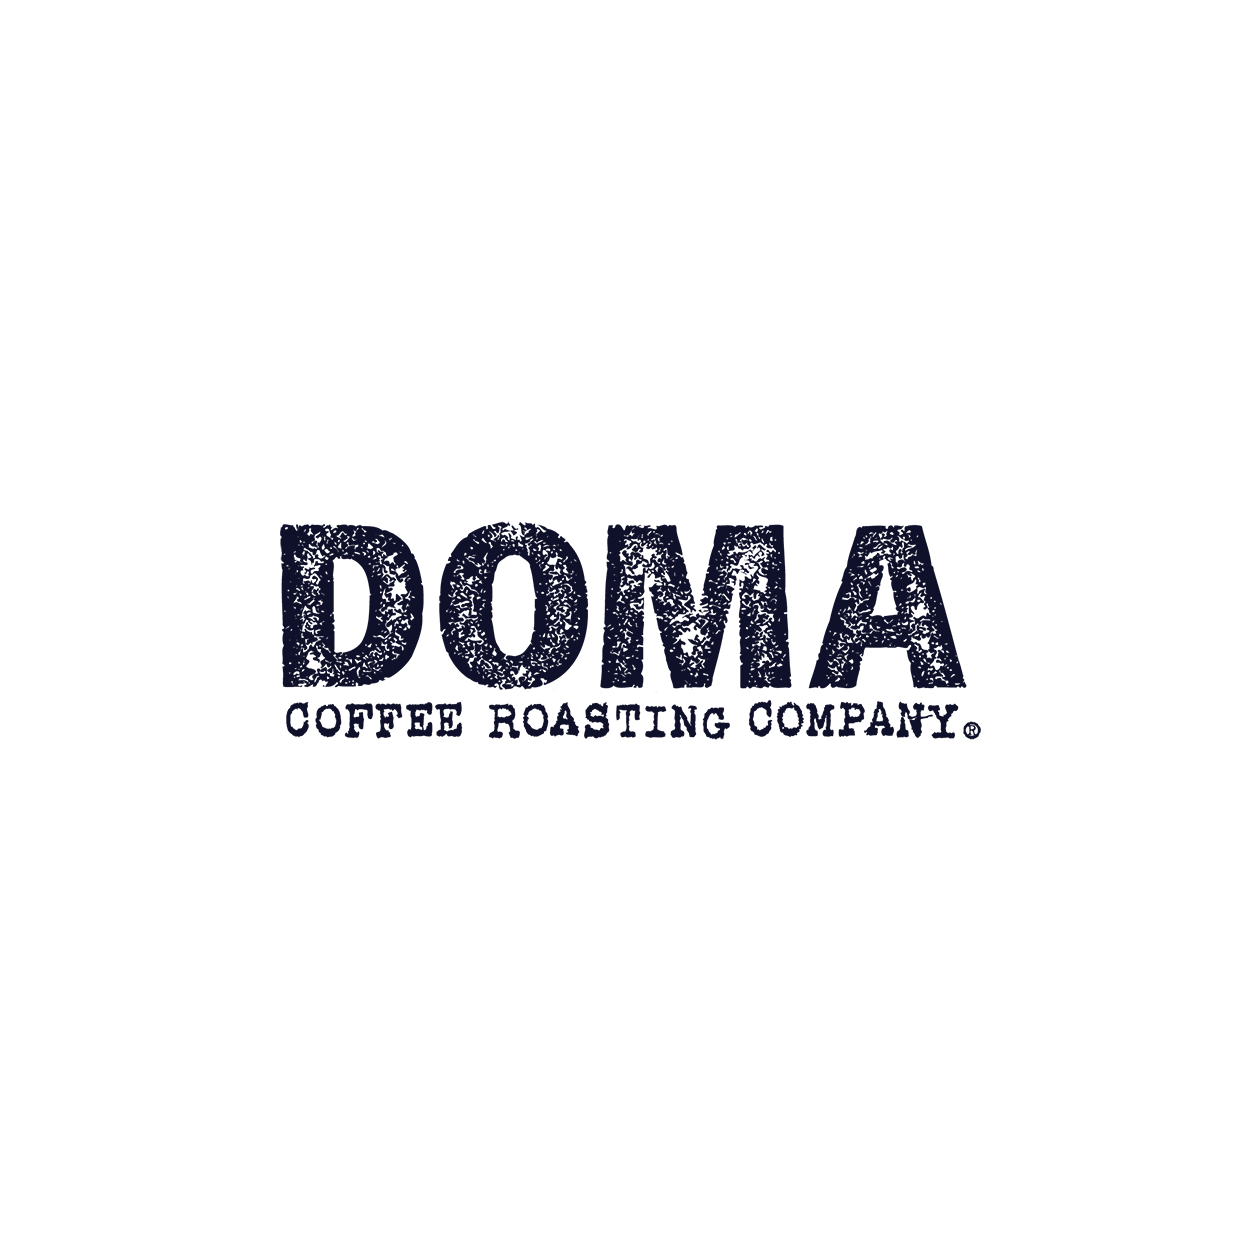 Doma Coffee Roasting Company